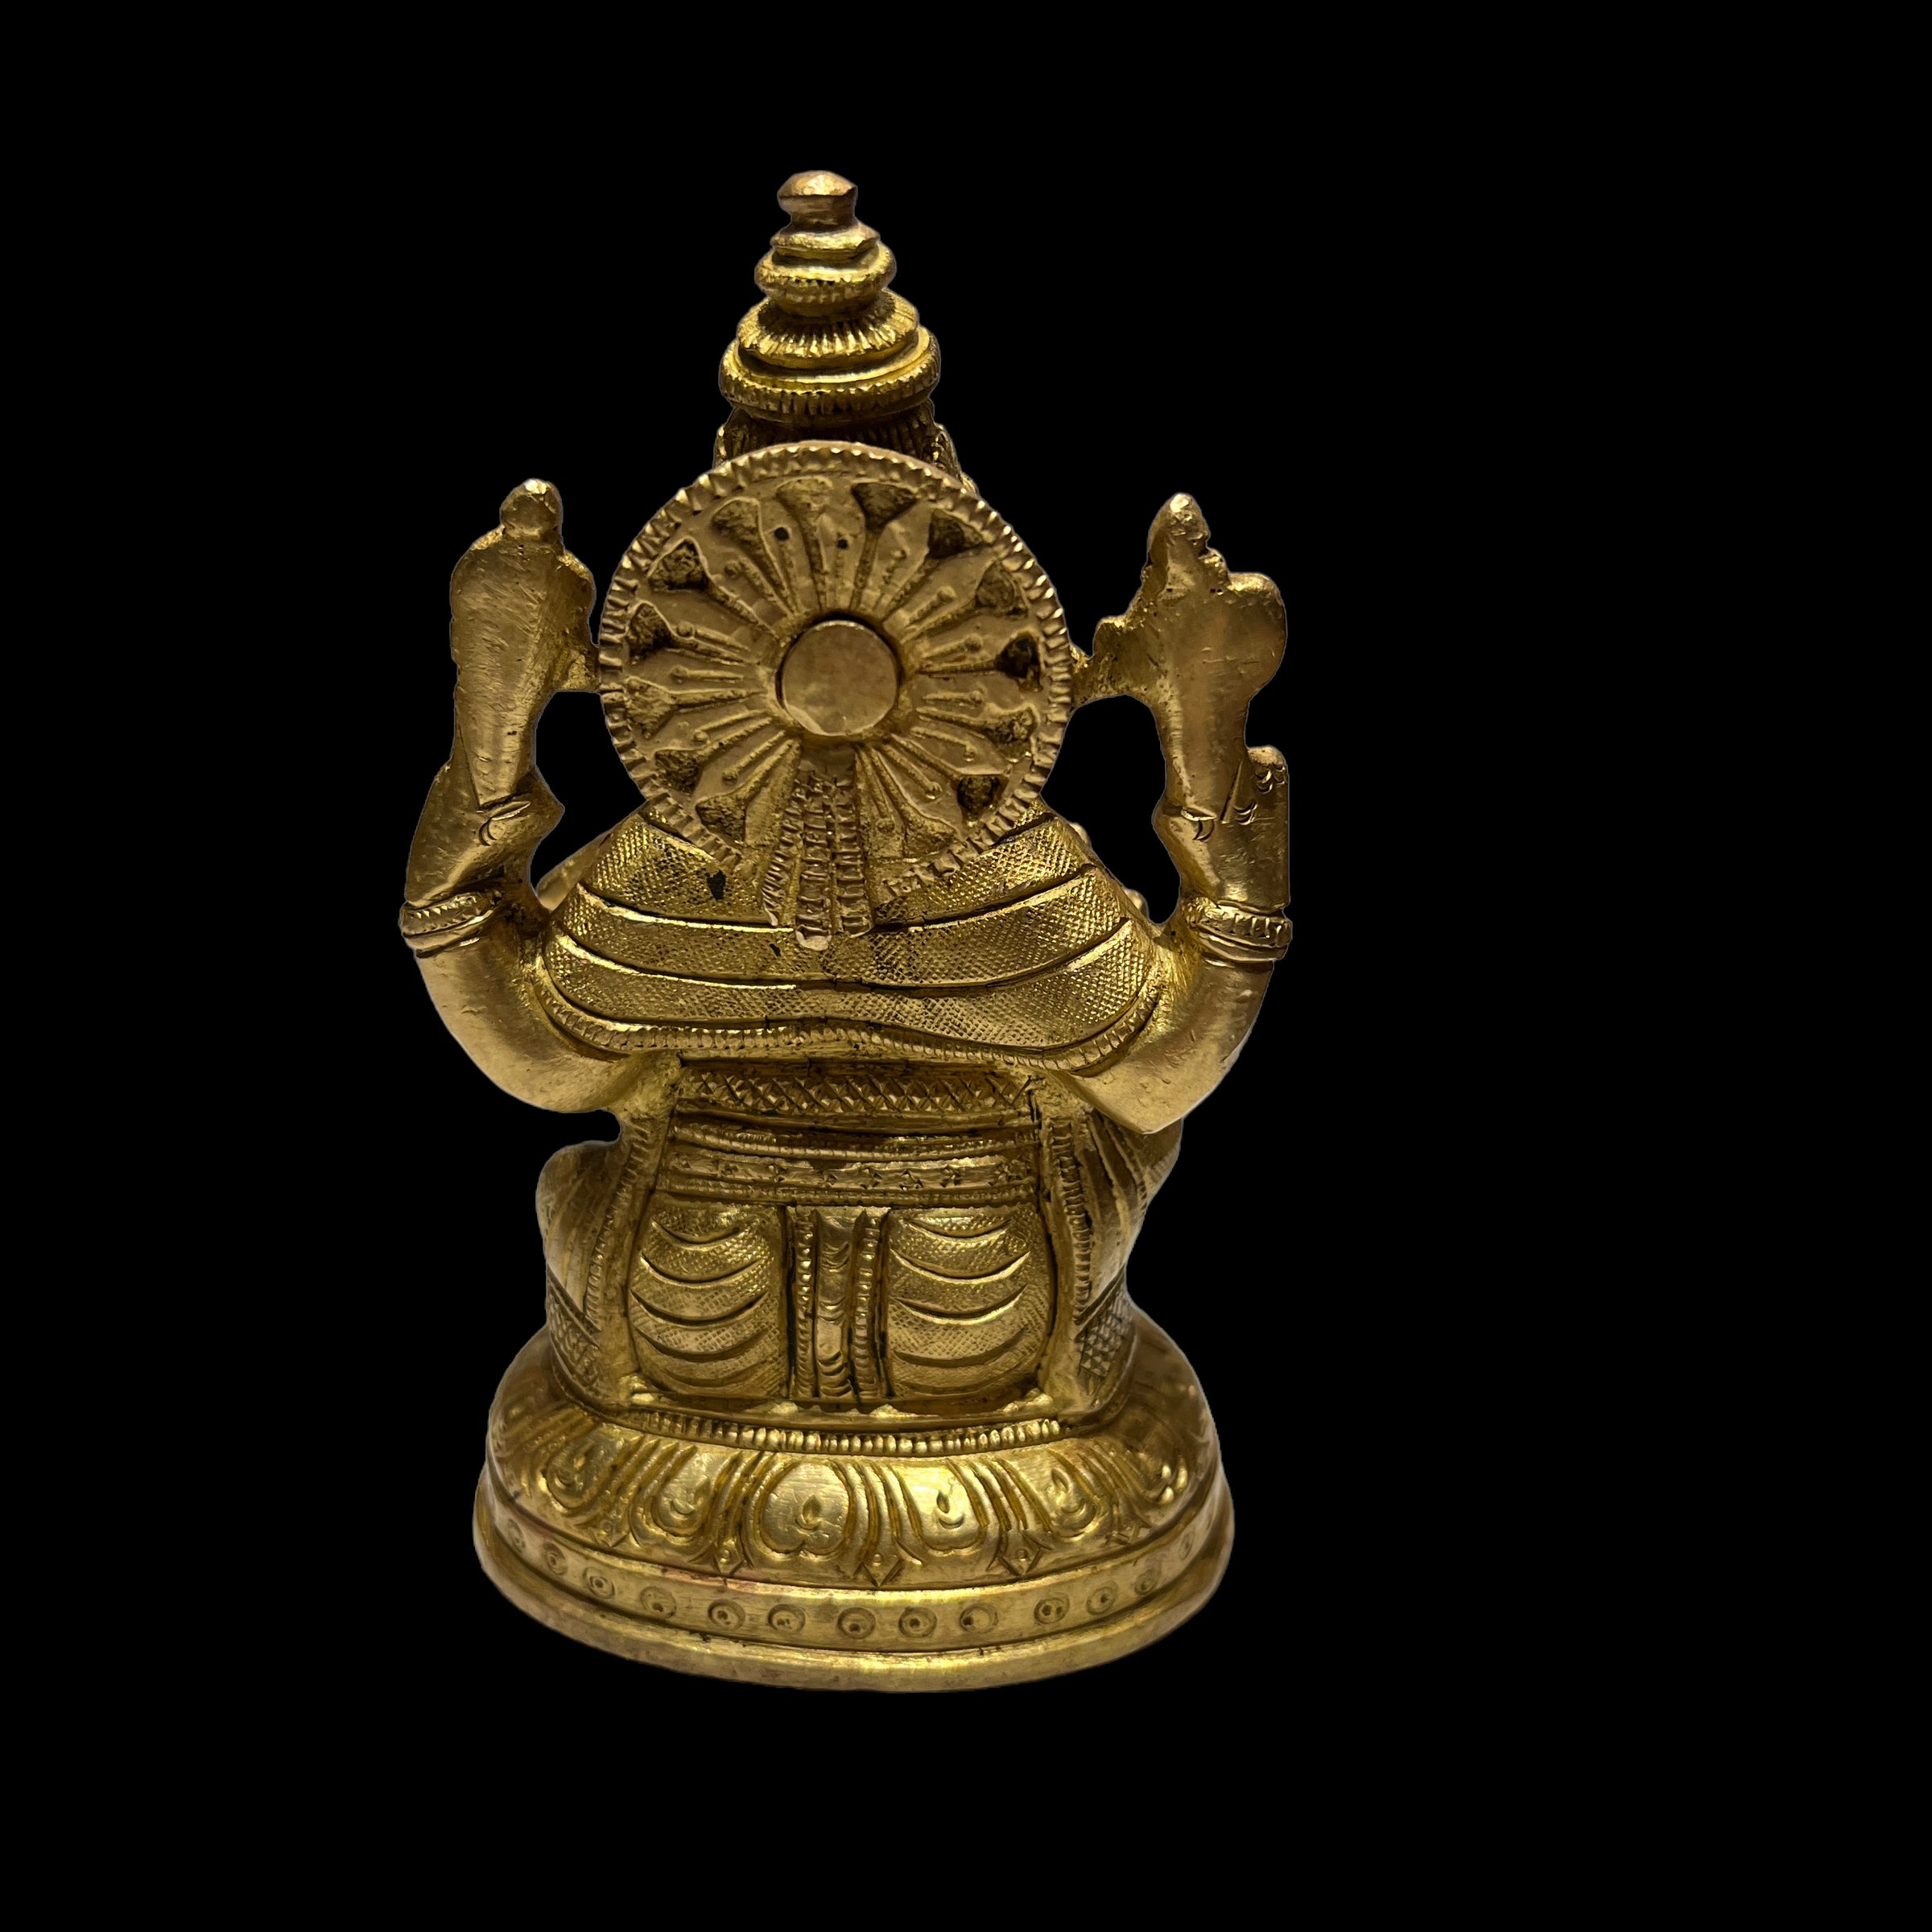 GM Bronze Ganesh 938 Statue - Vintage India NYC